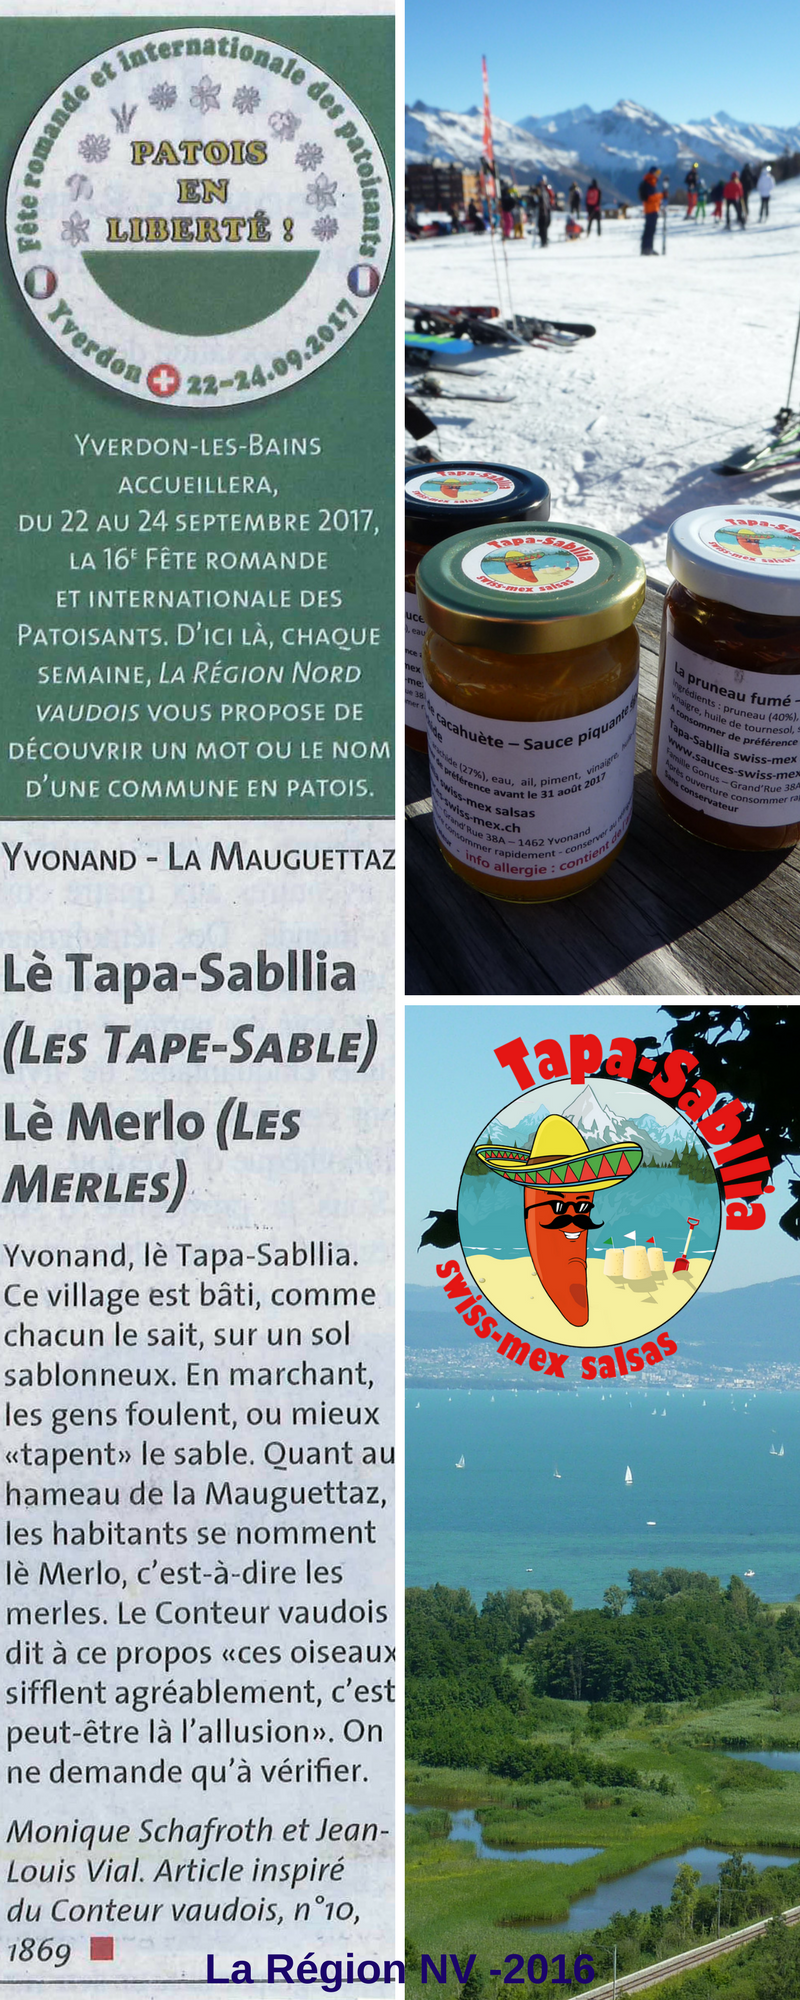 Tapa-Sabllia signification - Sauces piquantes d'Yvonand